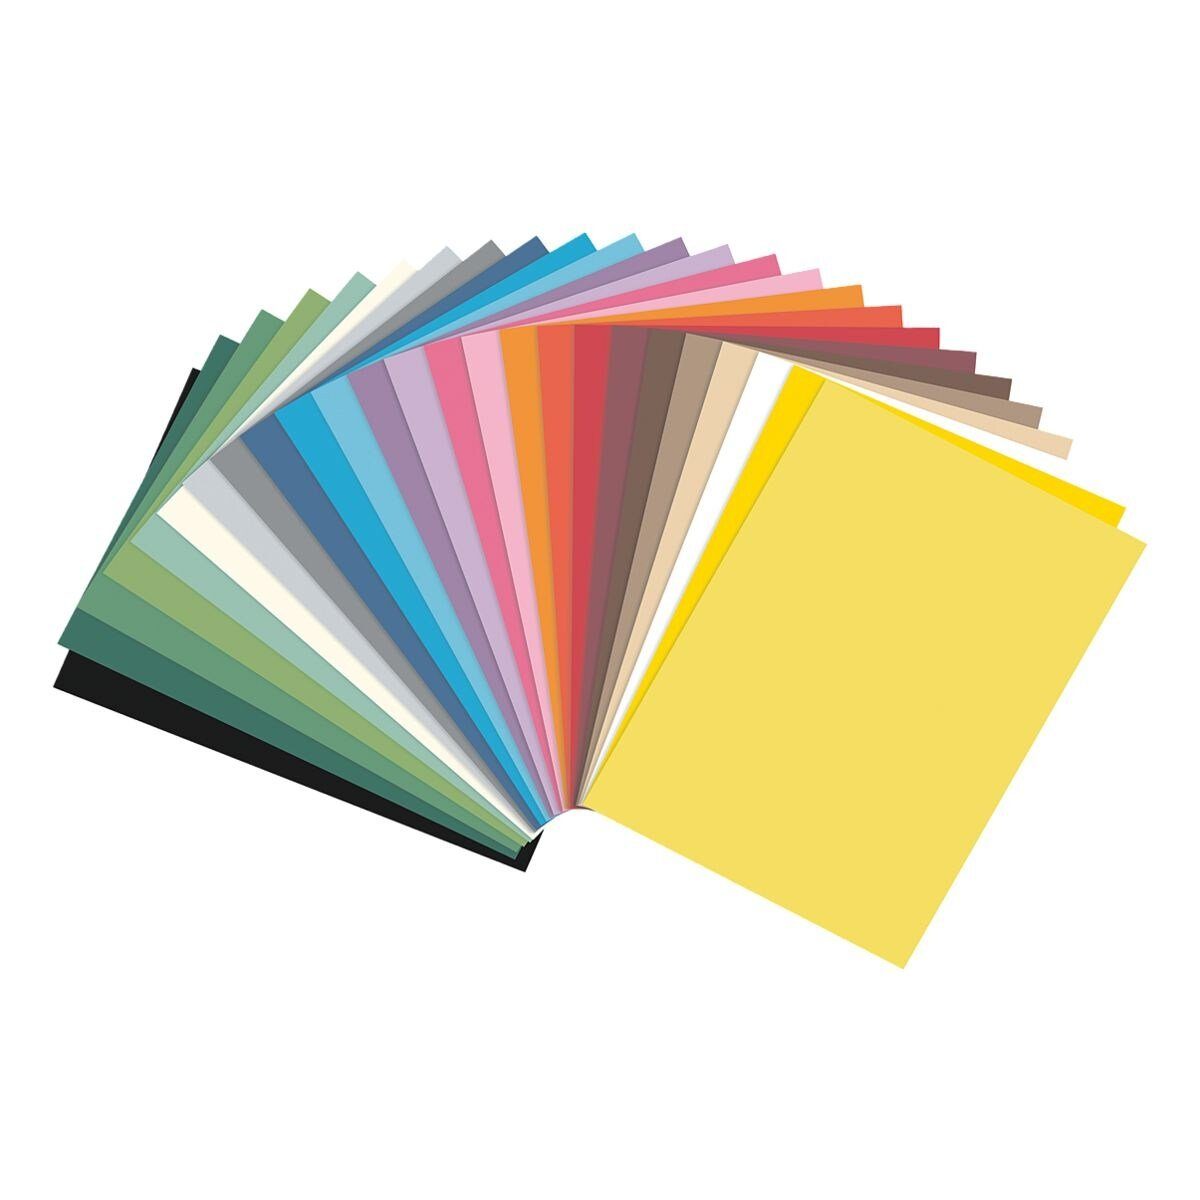 Bastelkartonpapier 25 Blatt 300 Farben, 35x50 25, 25 Sonderedition cm, Folia g/m², Fotokarton